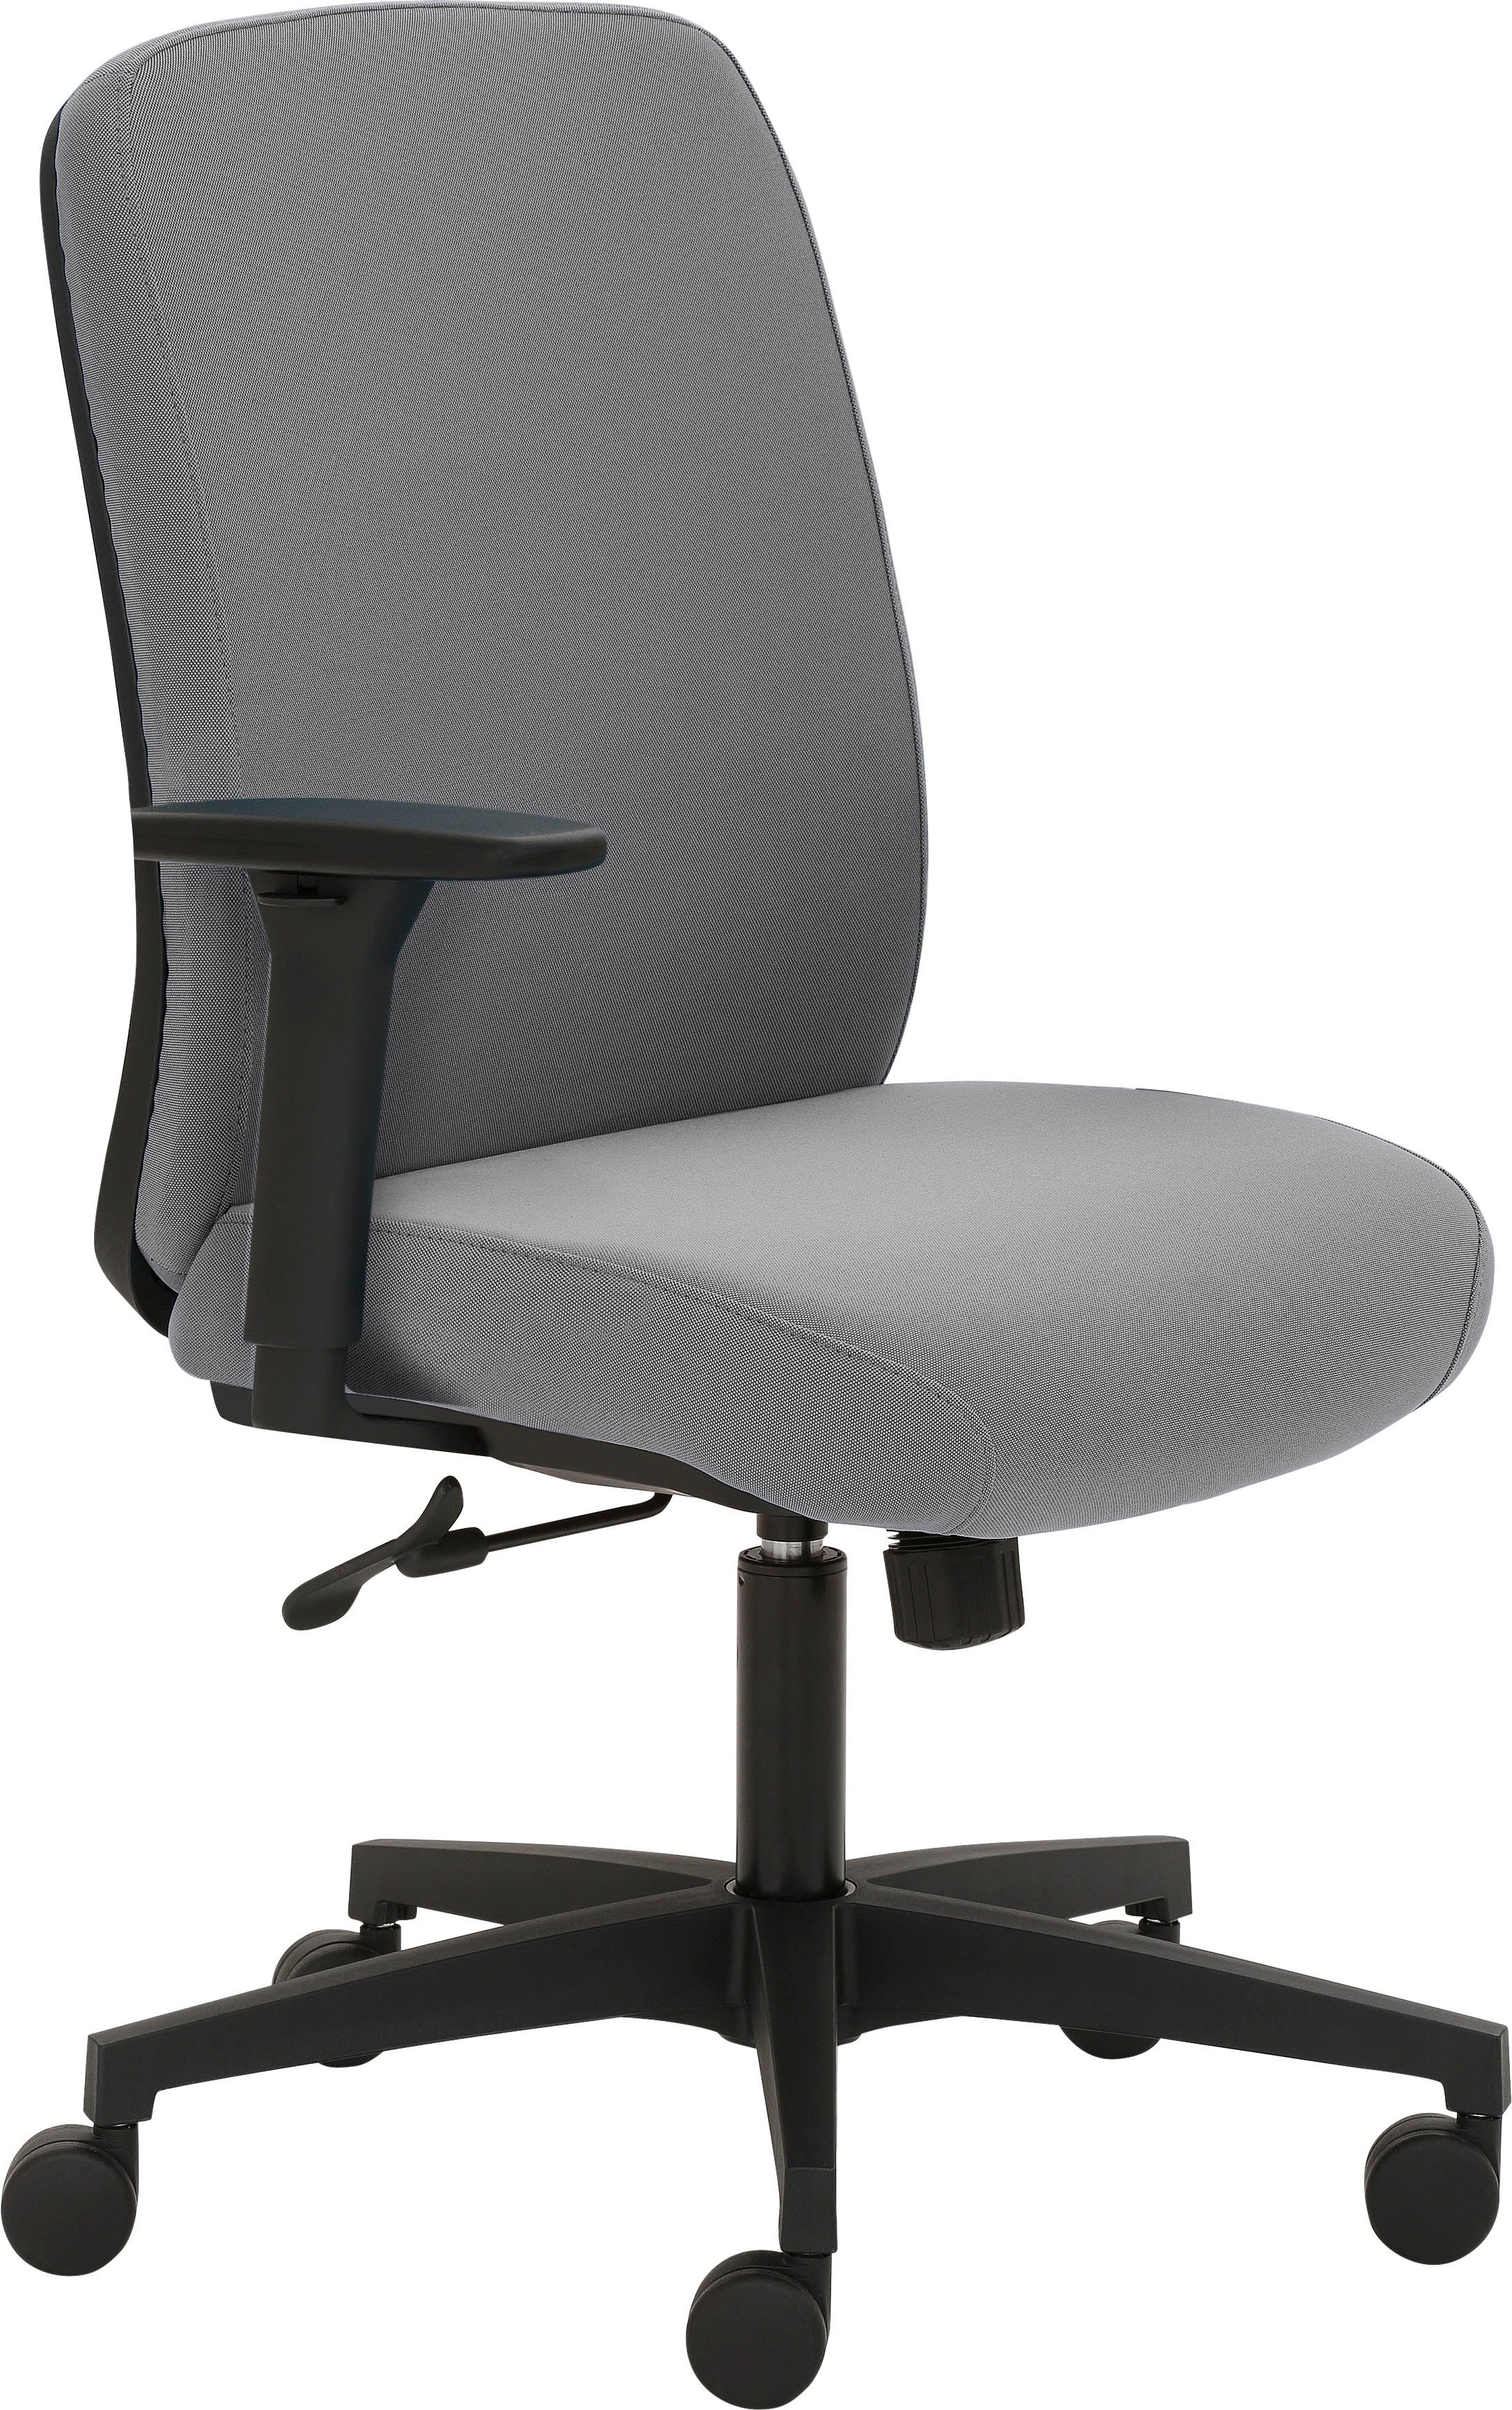 Mayer Sitzmöbel Drehstuhl 2219, GS-zertifiziert, extra starke Polsterung für maximalen Sitzkomfort Grau | Grau